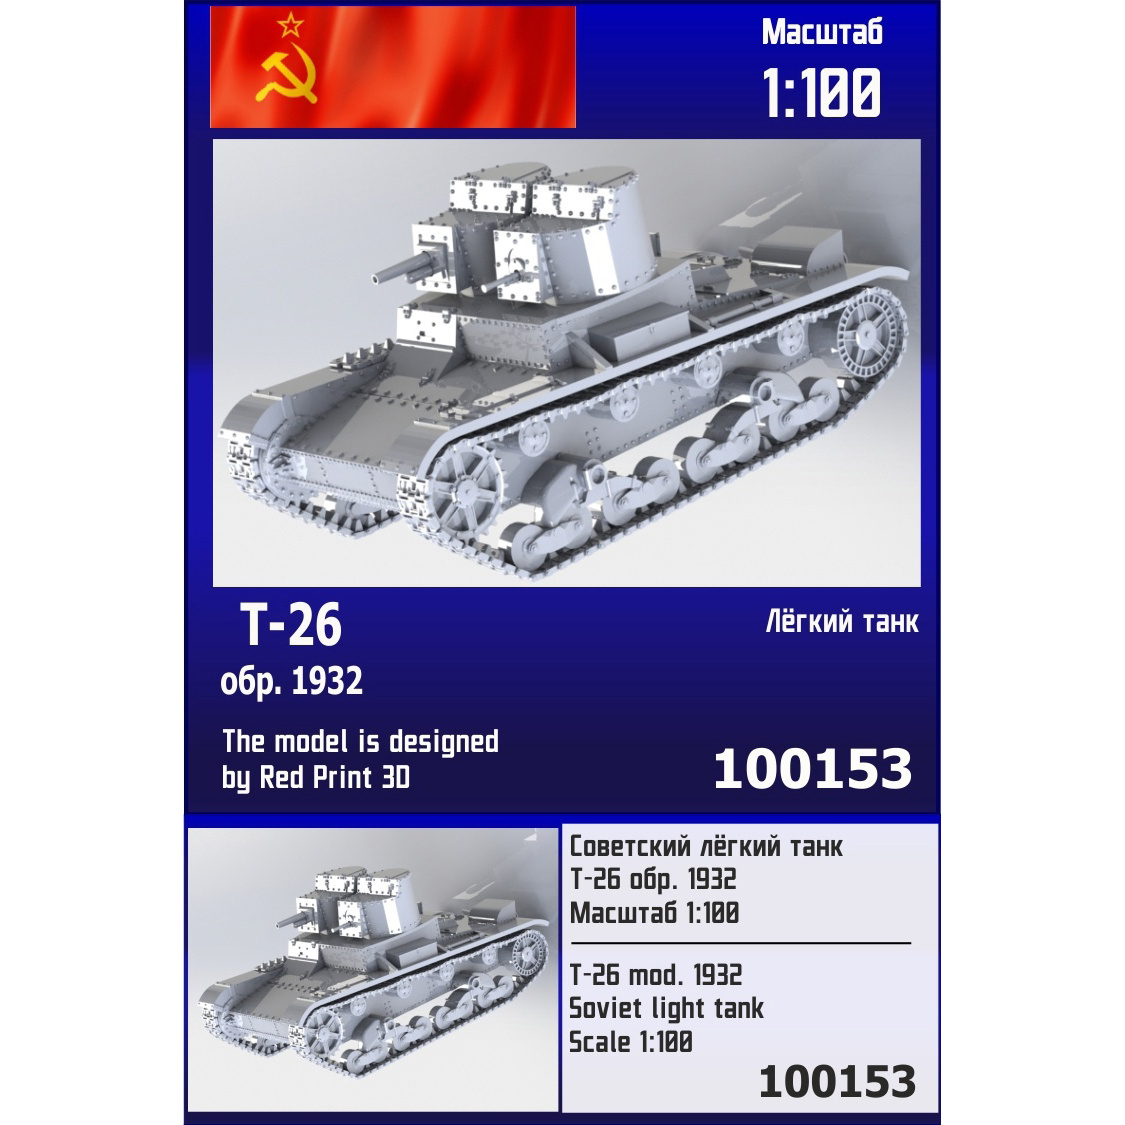 100153 Zebrano 1/100 Soviet light tank T-26 mod. 1932